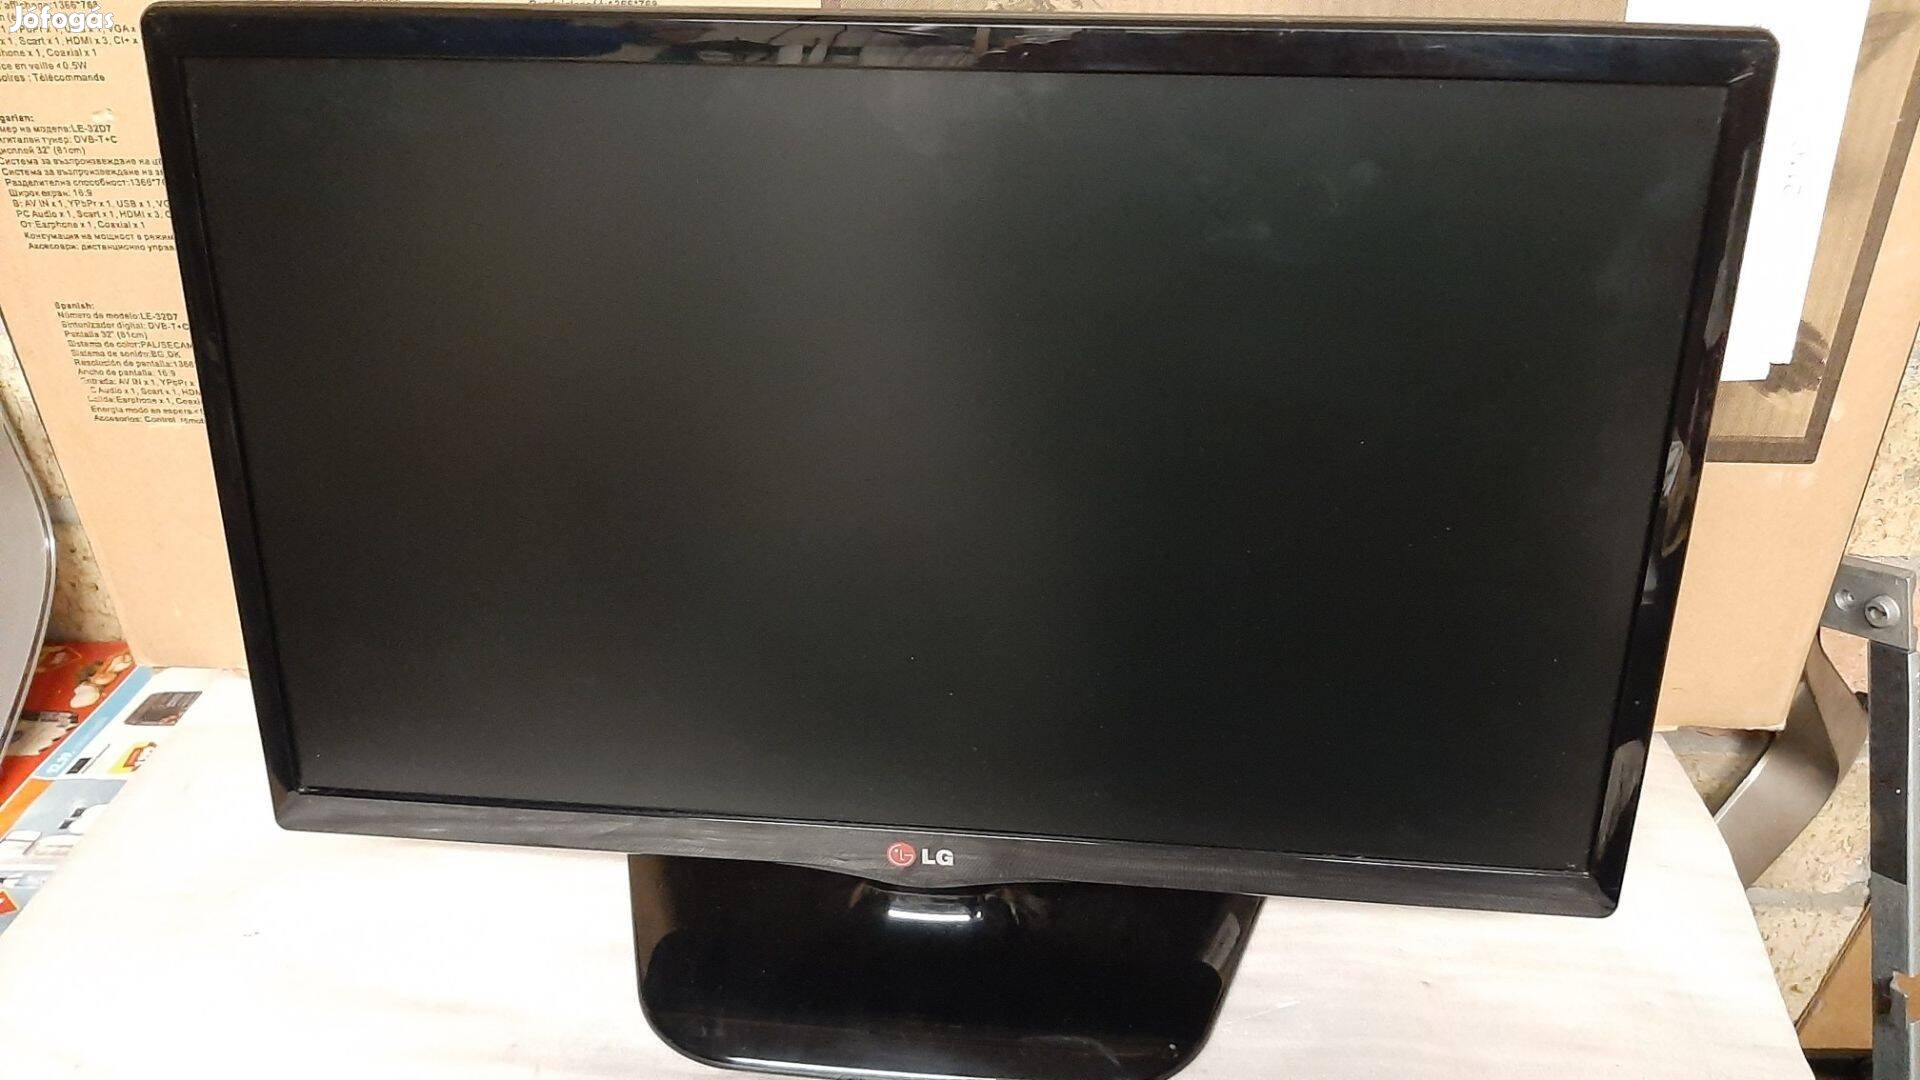 Lg 22MT45d 22" tévé- monitor full-hd. Nem indul